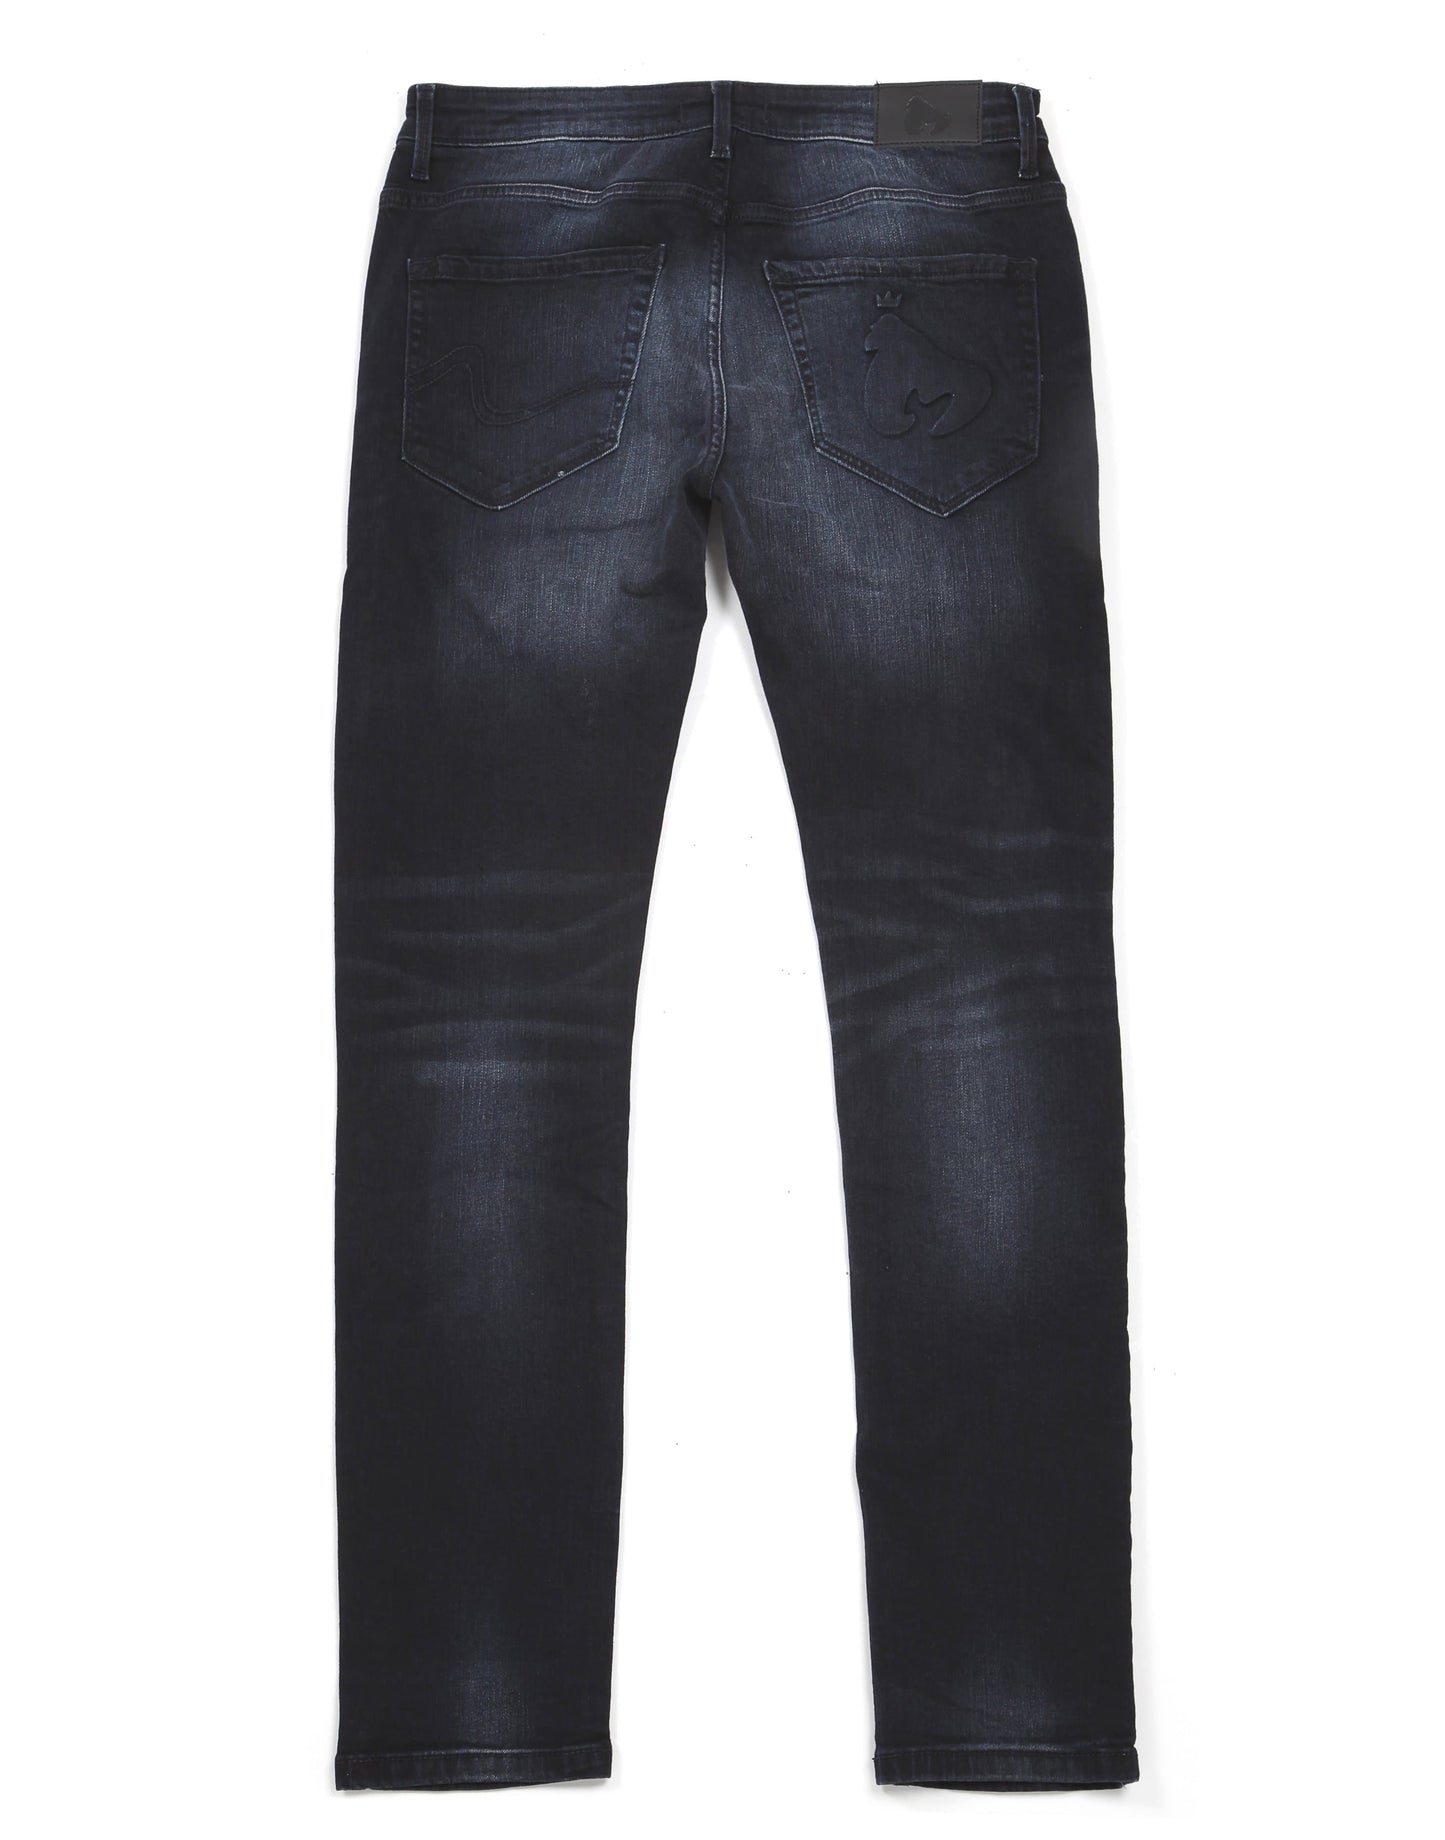 Ape Embossed Blue/Black Jean